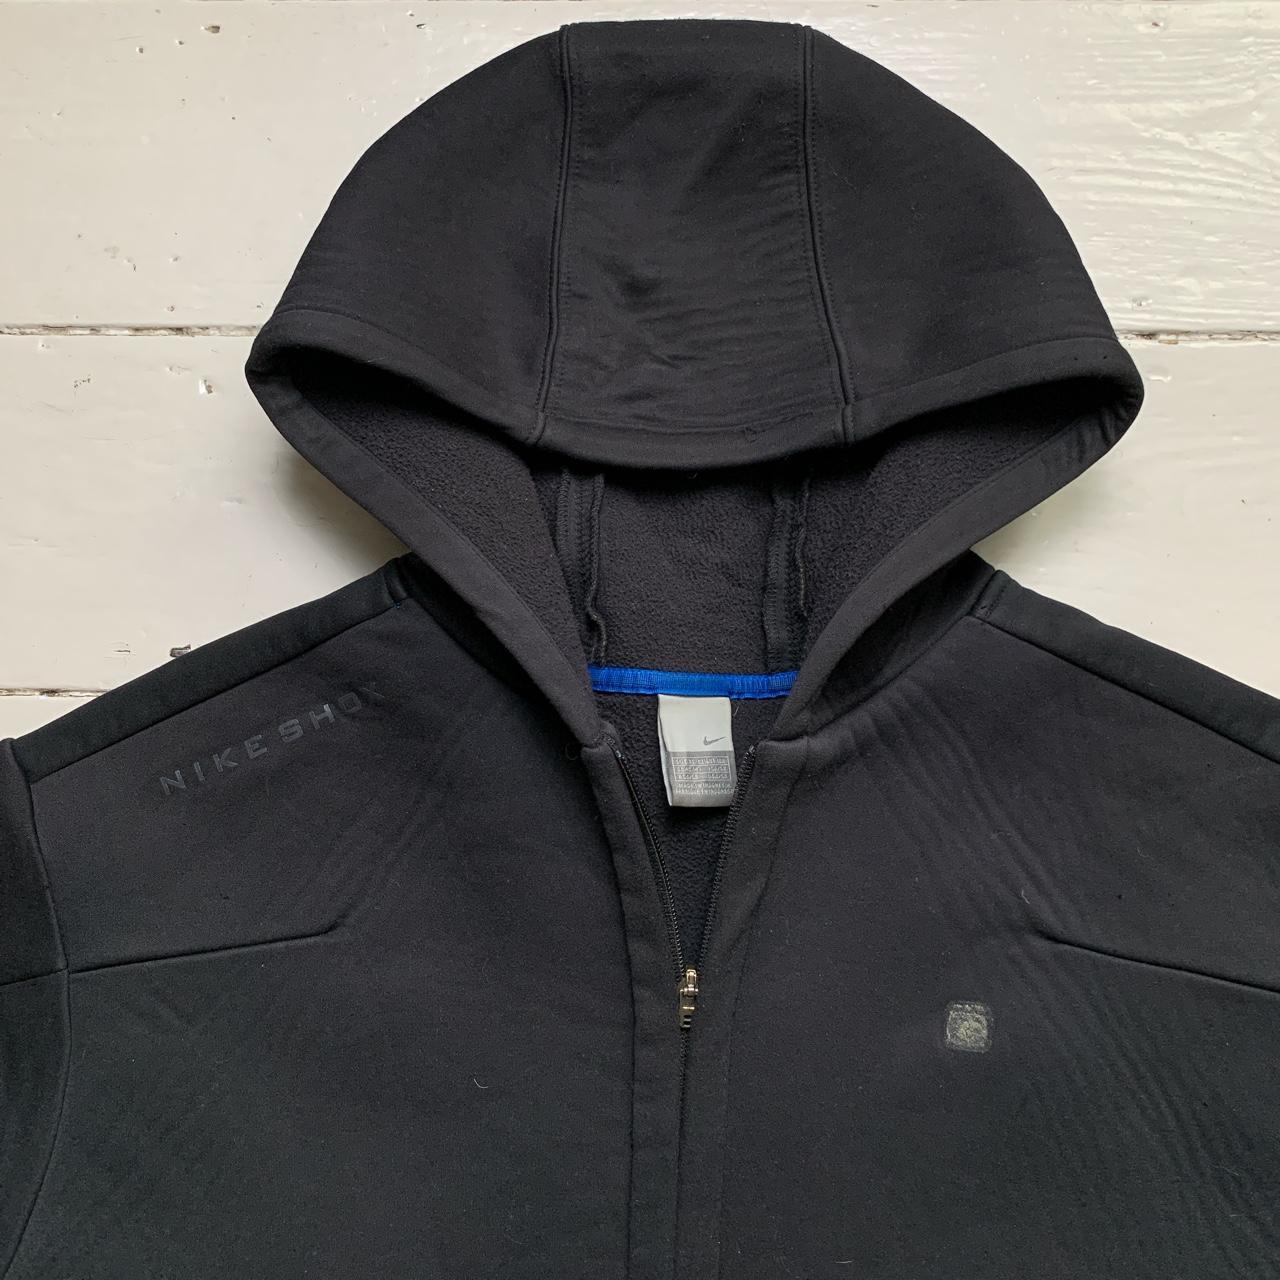 Nike Shox Vintage Scuba Neoprene Fleece Black and Blue Hoodie Jacket